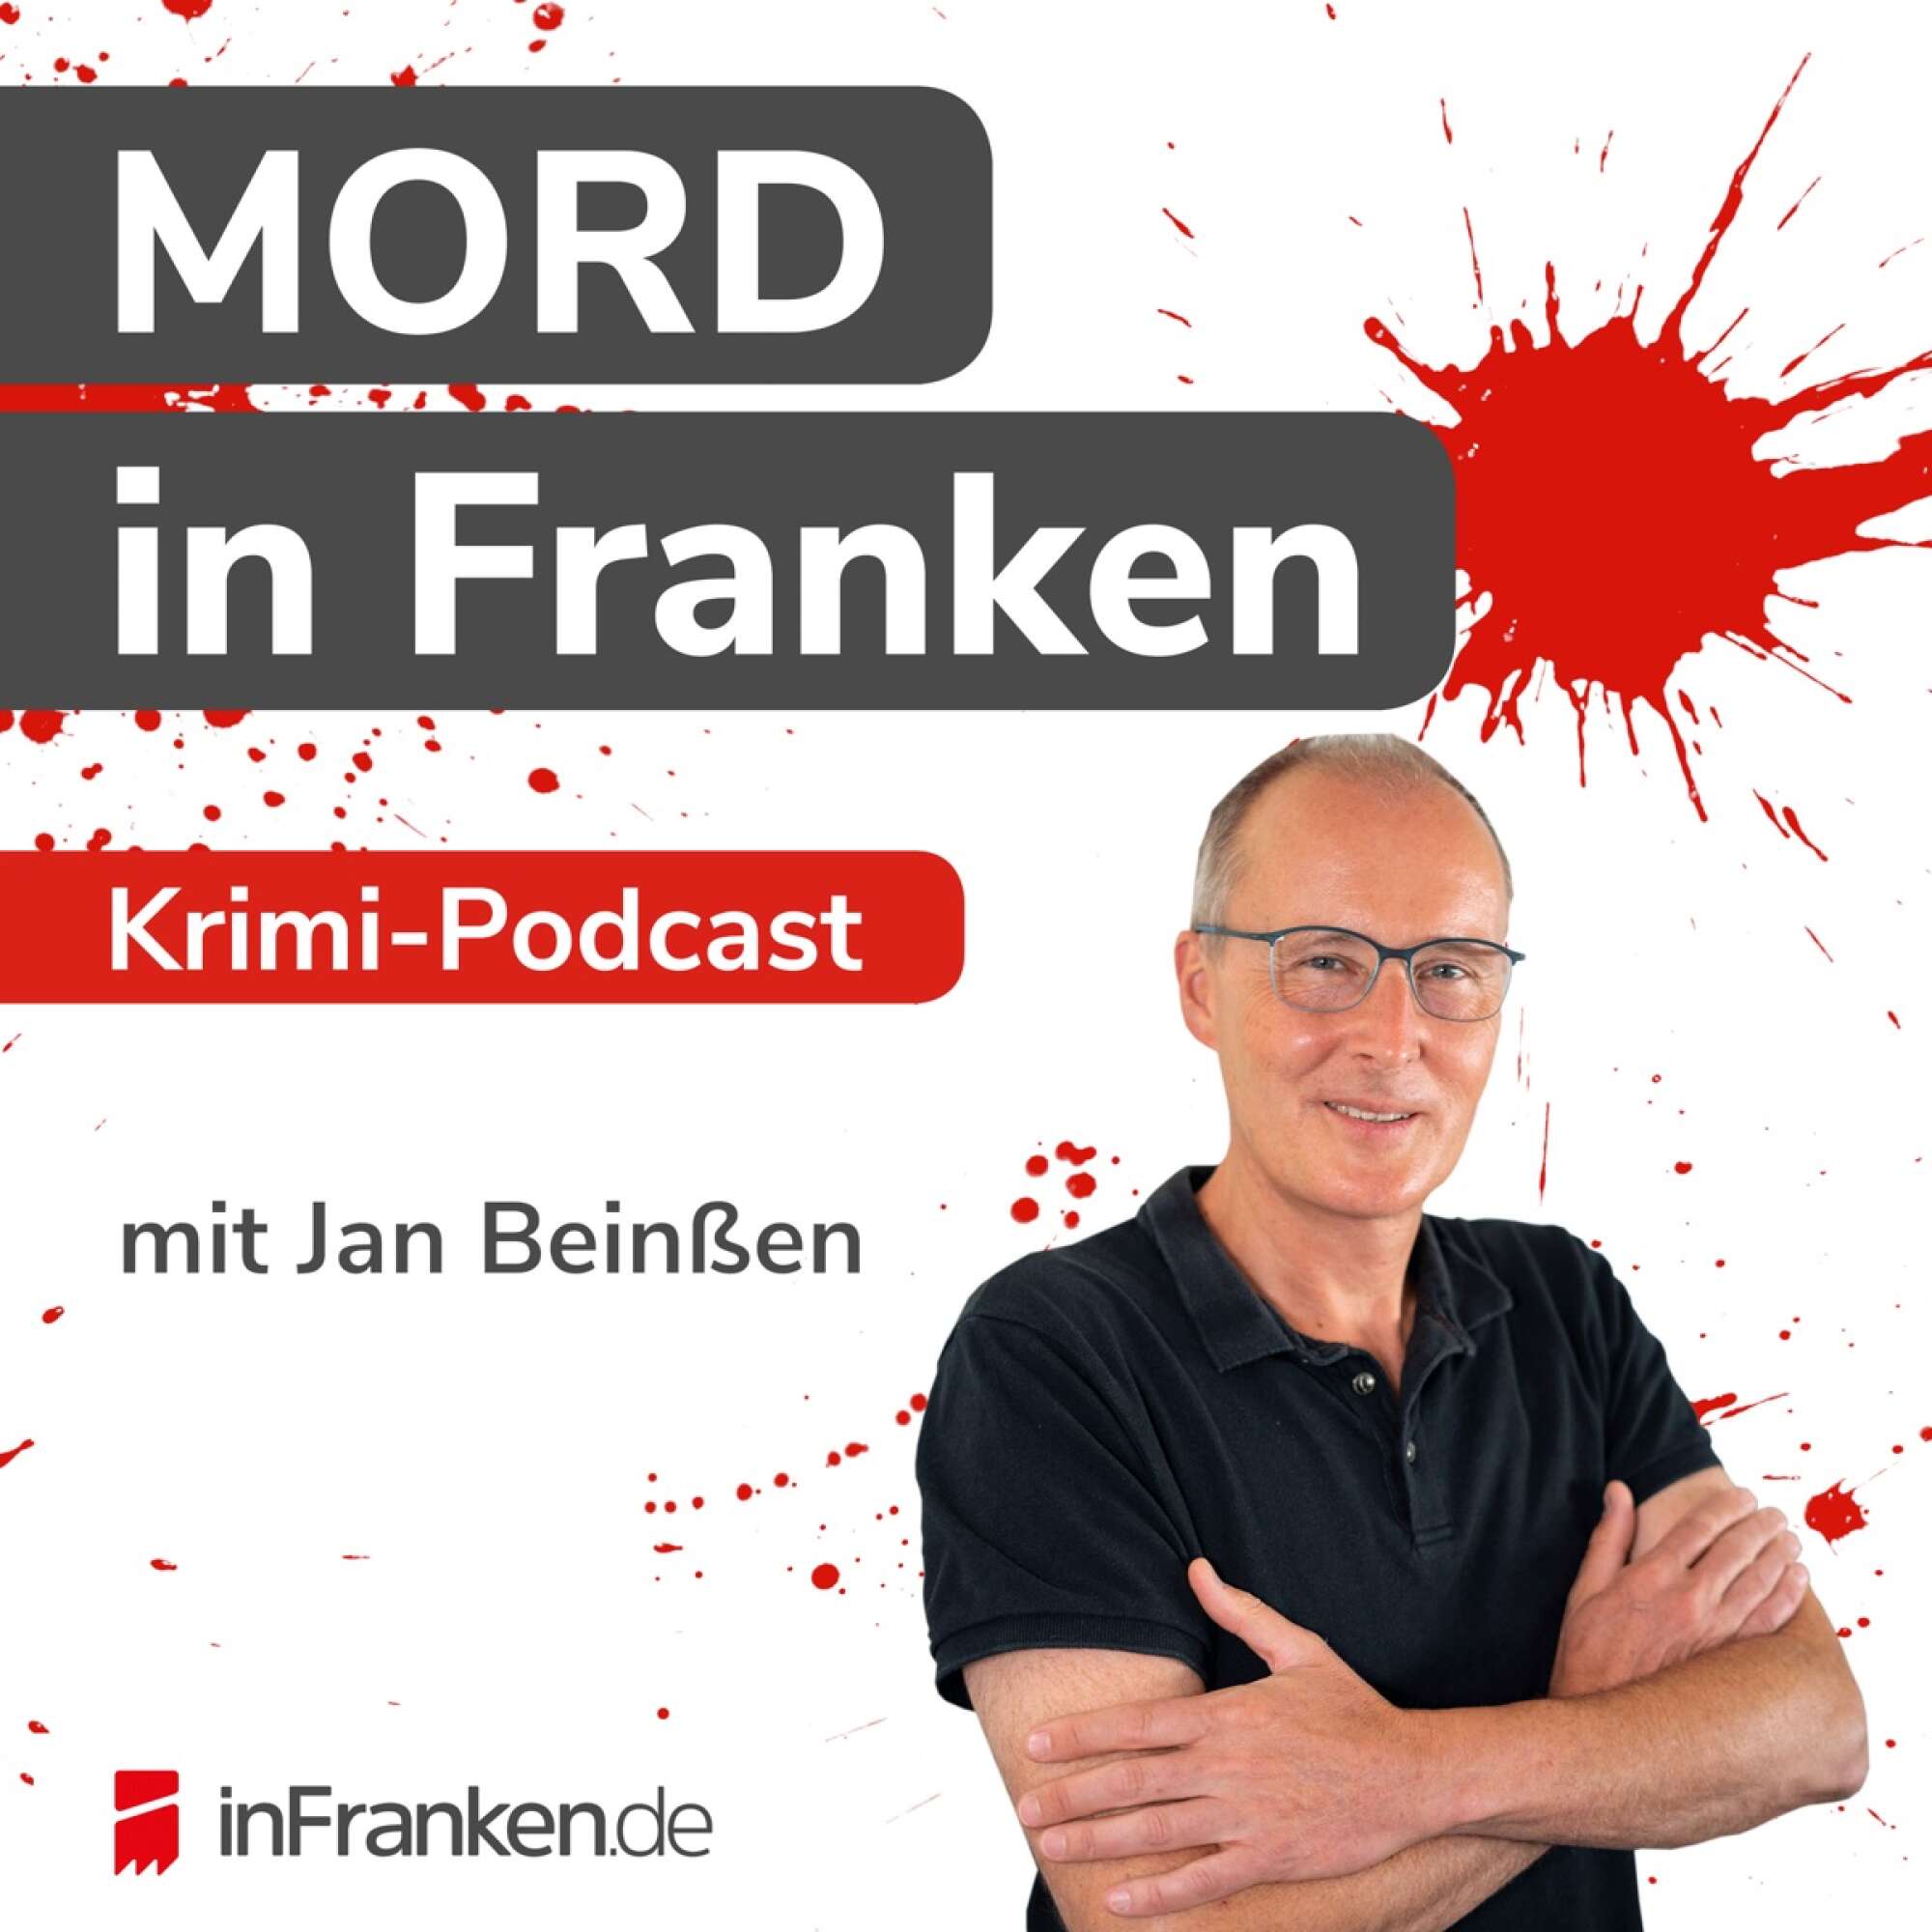 Podcast-Cover "MORD in Franken"